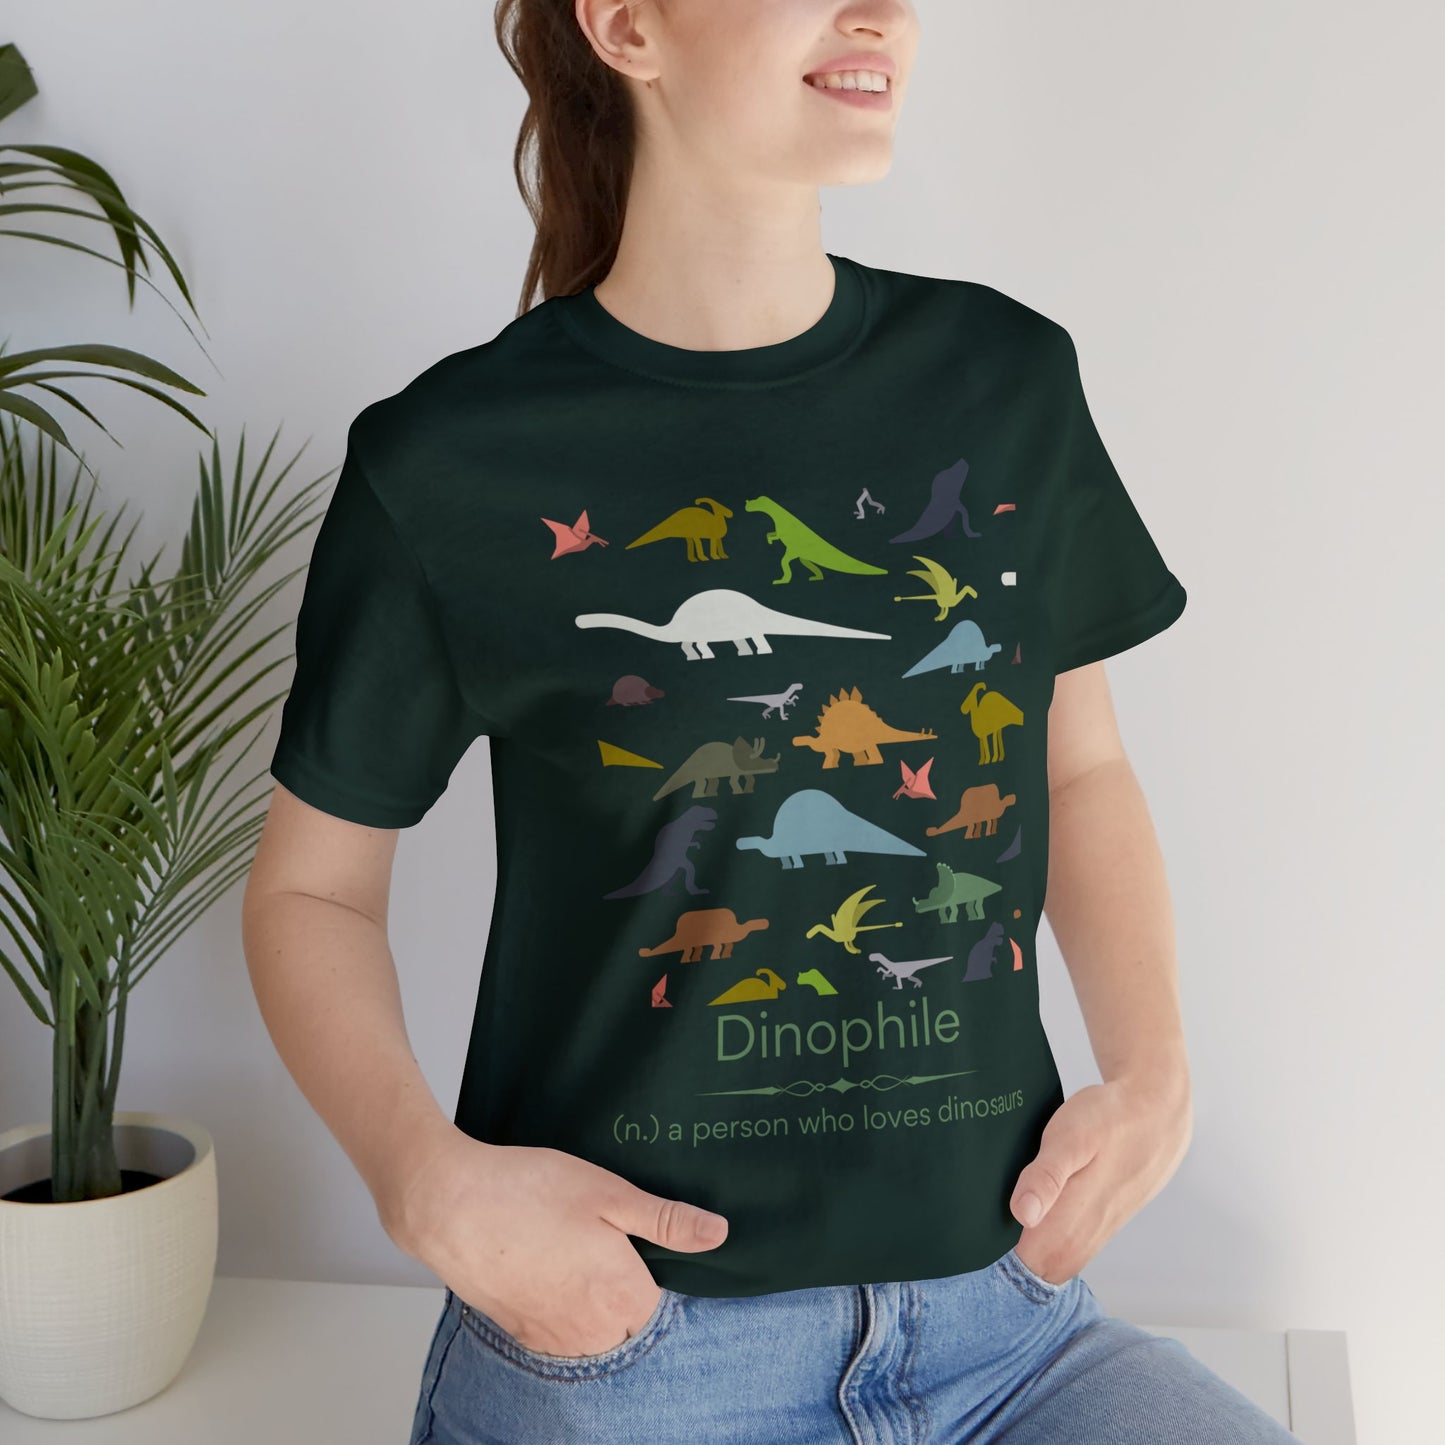 Dinophile - dinosaur lover T-shirt